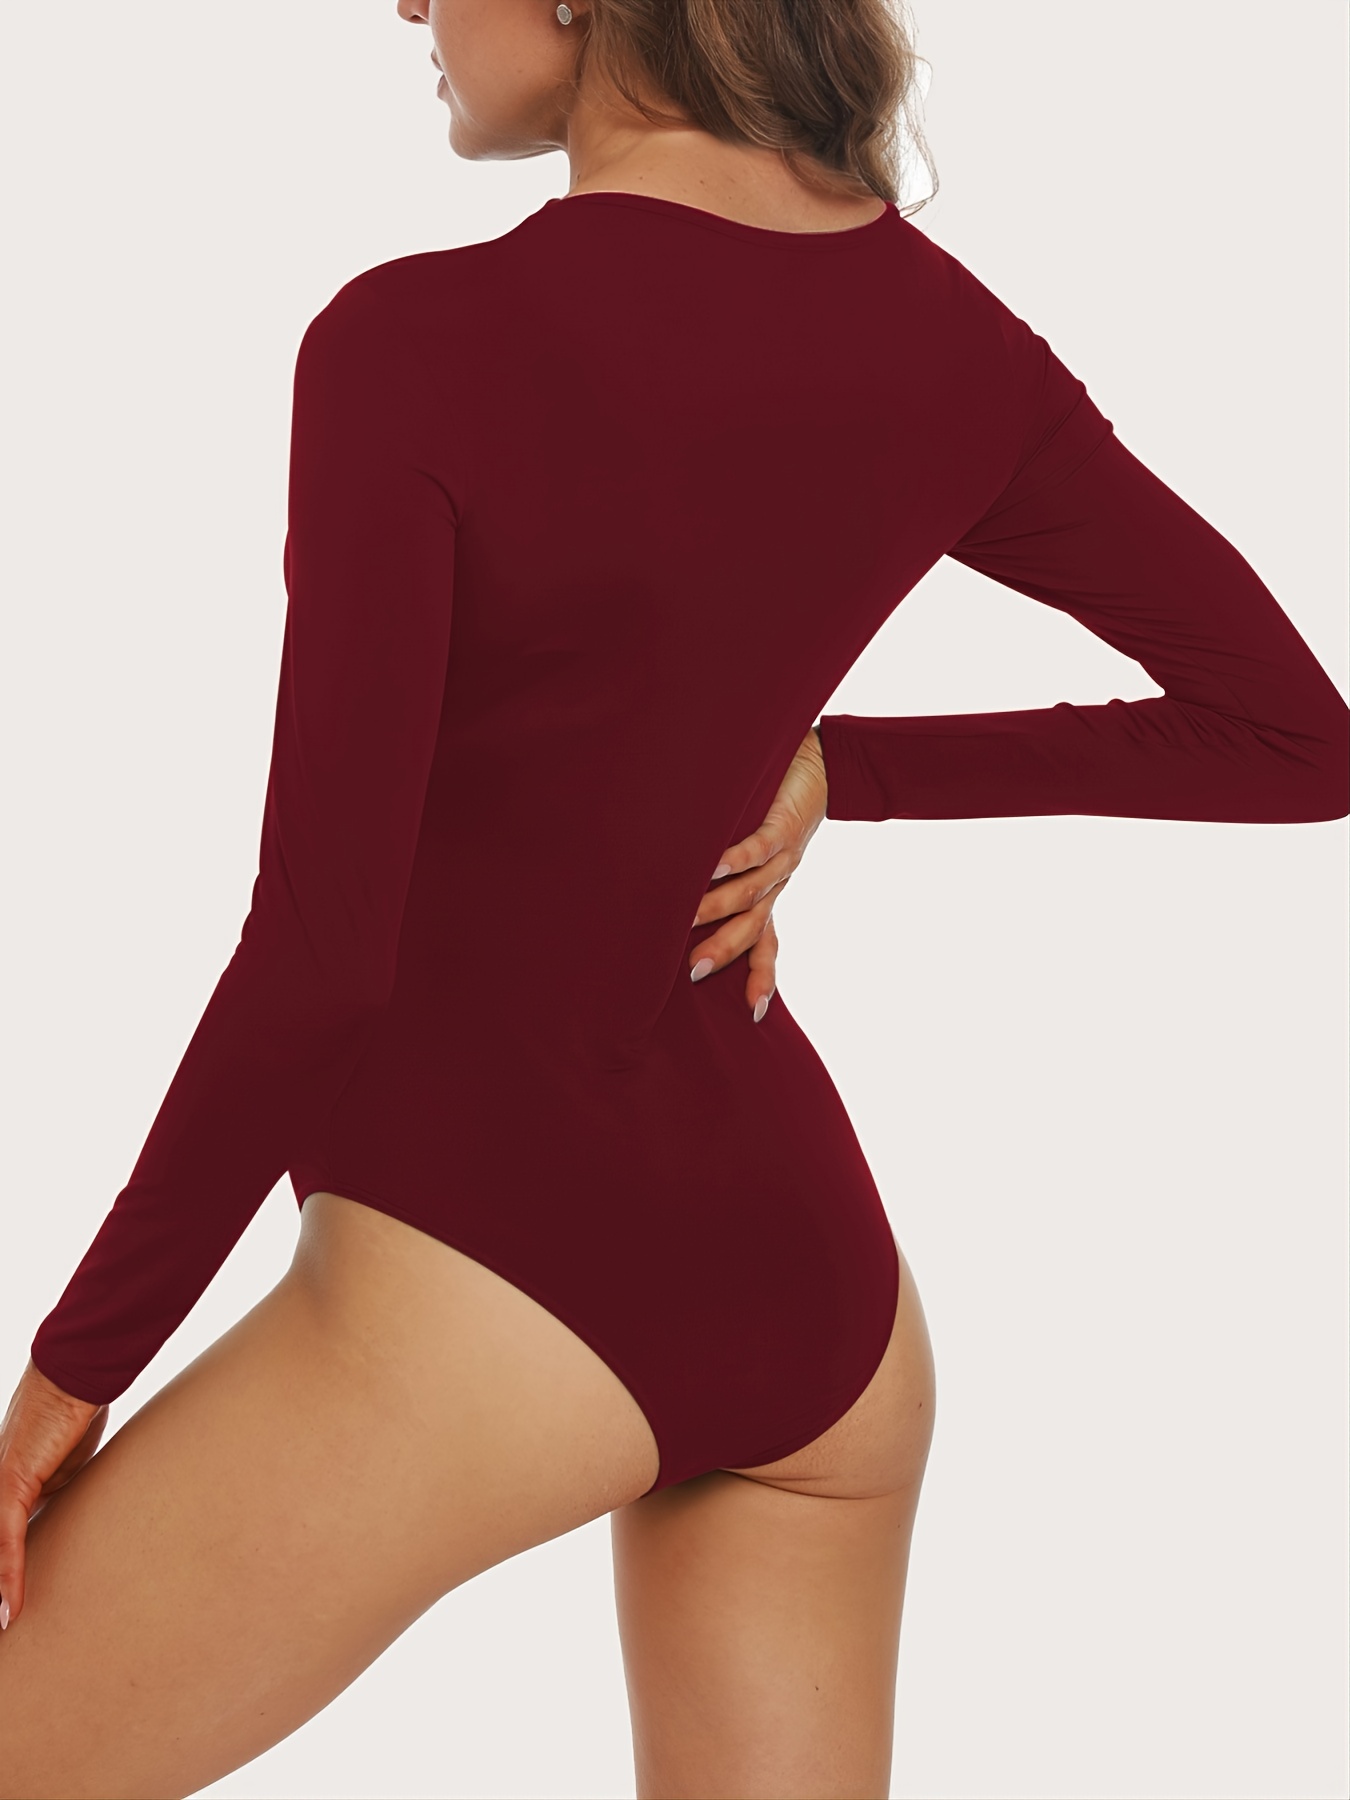 TUNUSKAT Women's Sexy Long Sleeve Bodysuit Slimming Square Neck T Shirt  Body Suit Ladies Seamless Dressy Tops Romper Jumpsuit : :  Everything